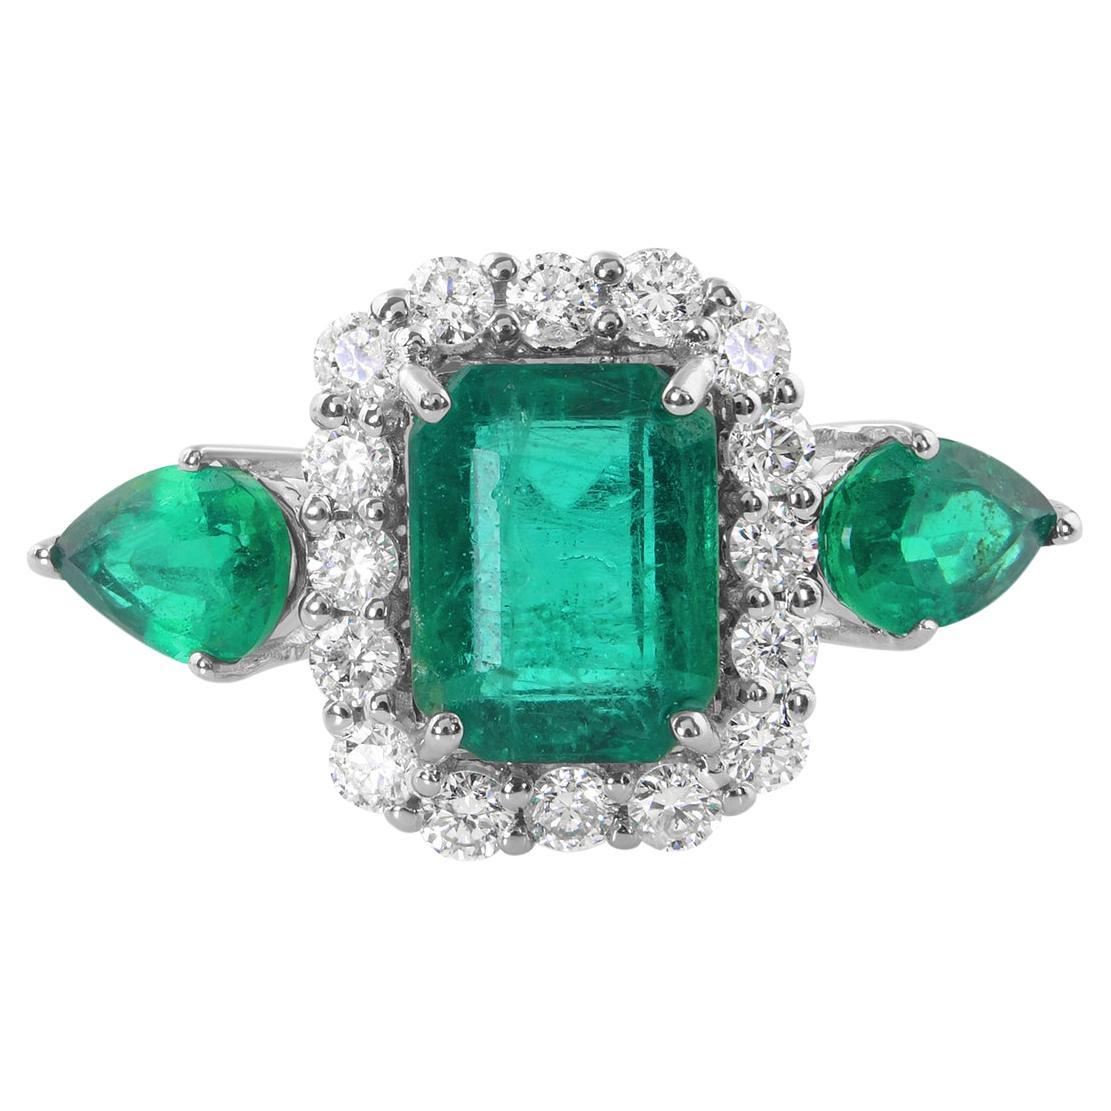 Zambian Emerald Gemstone Cocktail Ring Diamond 14 Karat White Gold Fine Jewelry